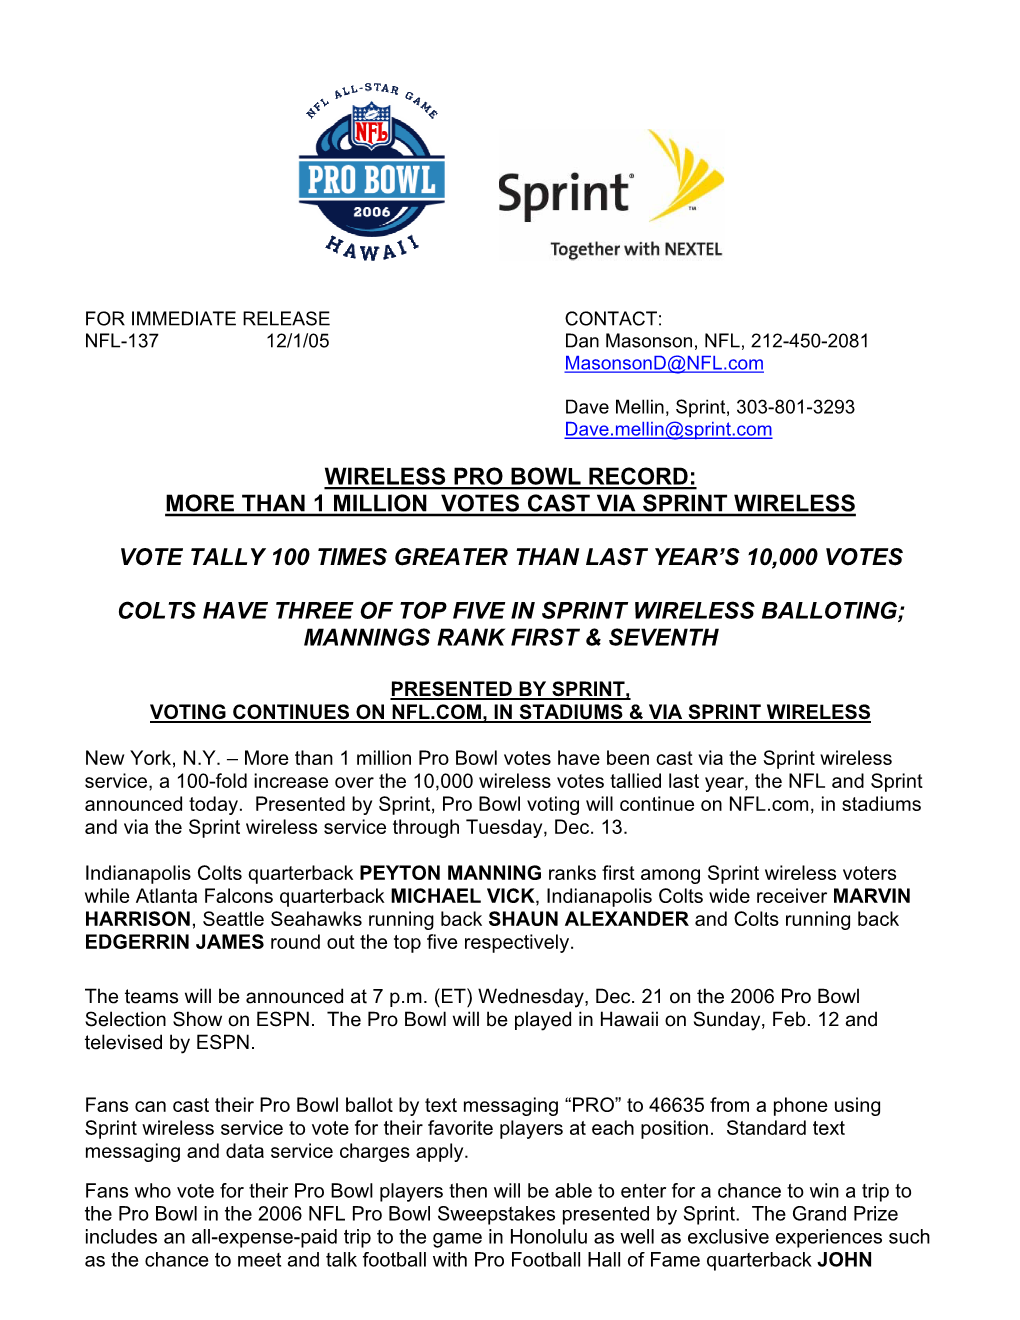 Wireless Pro Bowl Record: More Than 1 Million Votes Cast Via Sprint Wireless